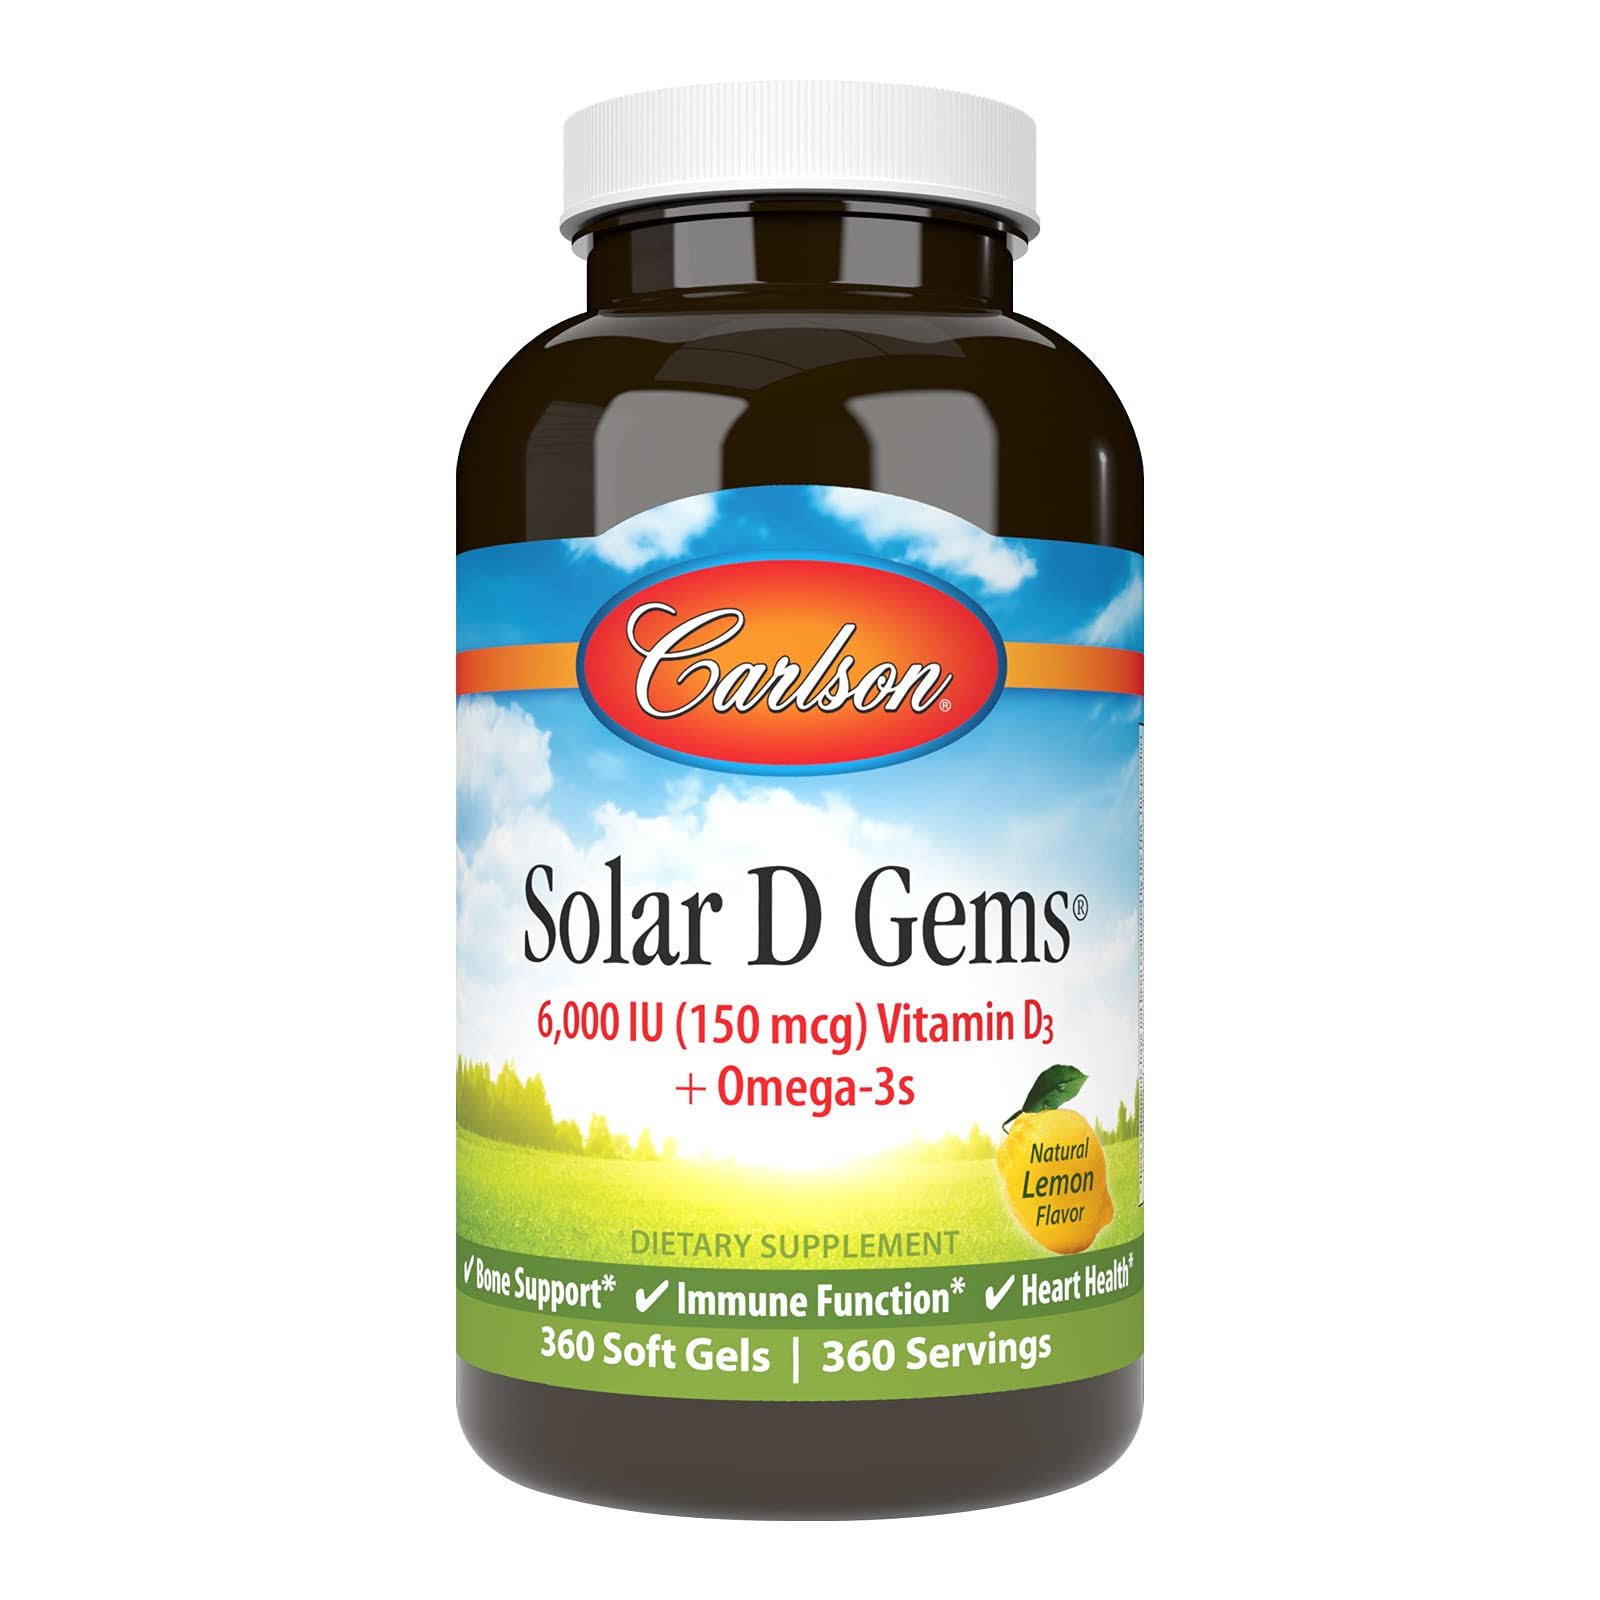 Carlson - Solar D Gems 6000 IU (150 mcg) Vitamin D3, 115 MG Omega-3 EPA and DHA, Vitamin D Fish Oil capsule, Lemon, 360 Softgels